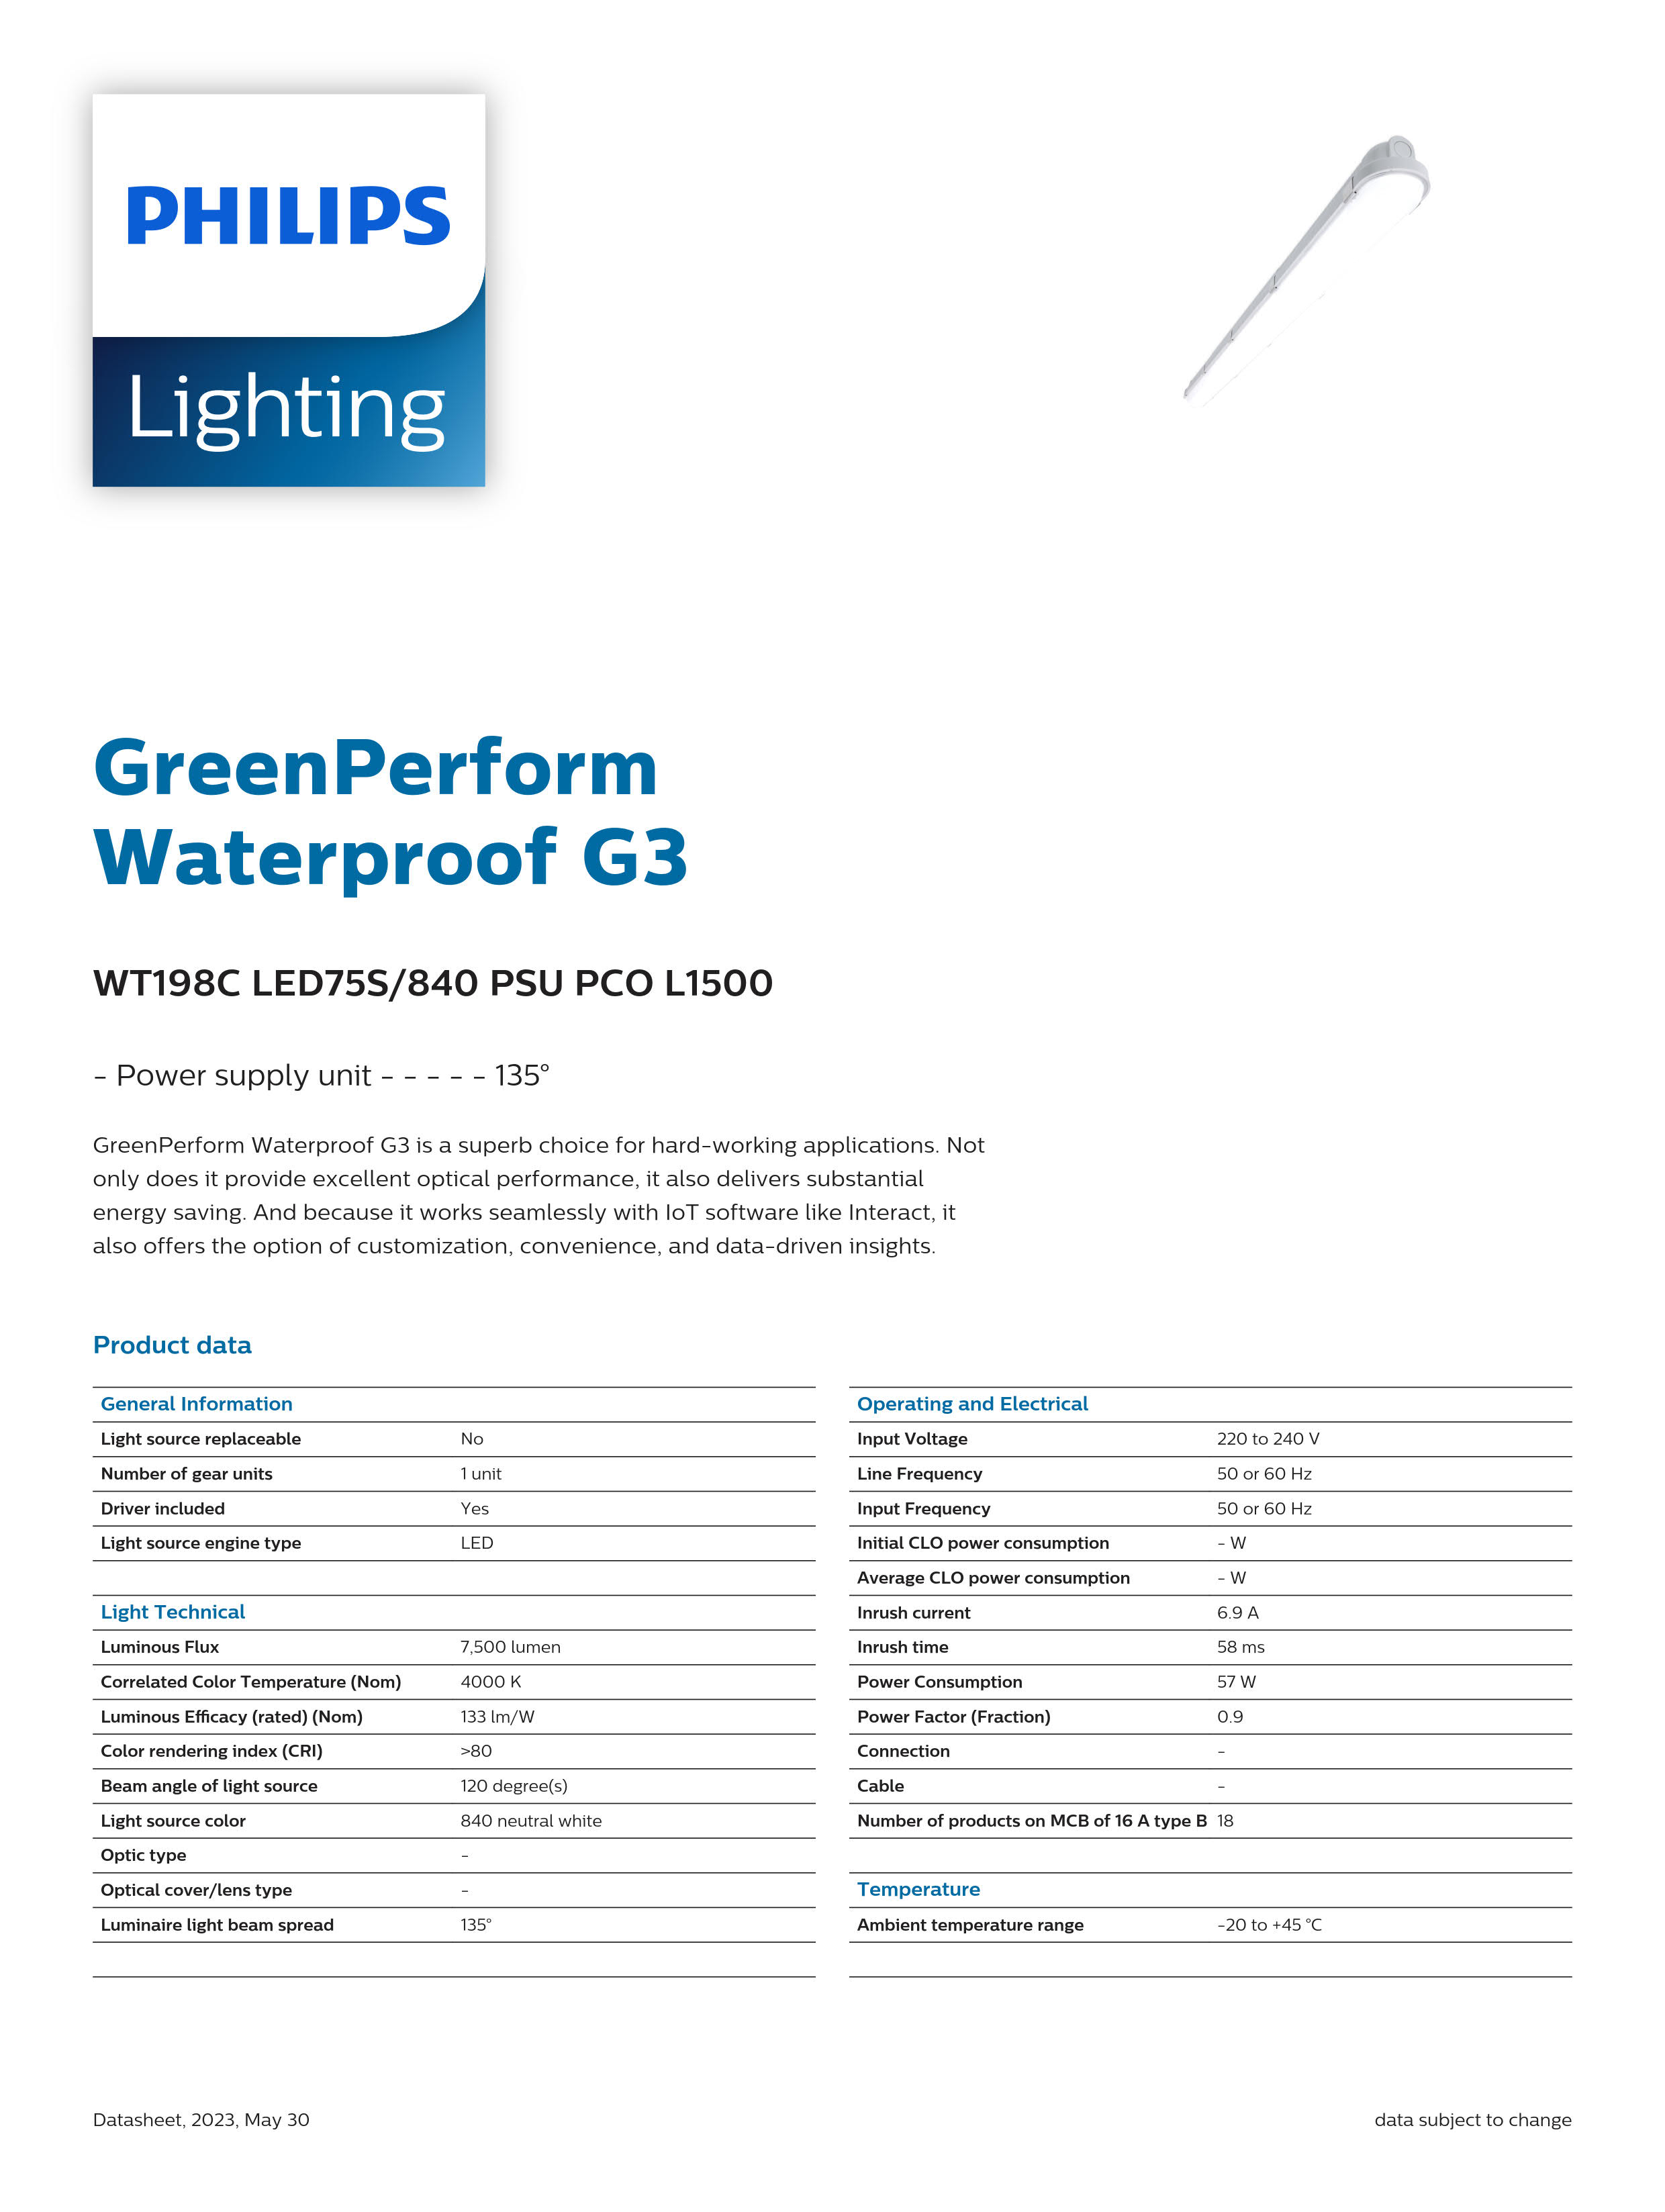 PHILIPS Waterproof WT198C LED75S/840 PSU PCO L1500 911401826580